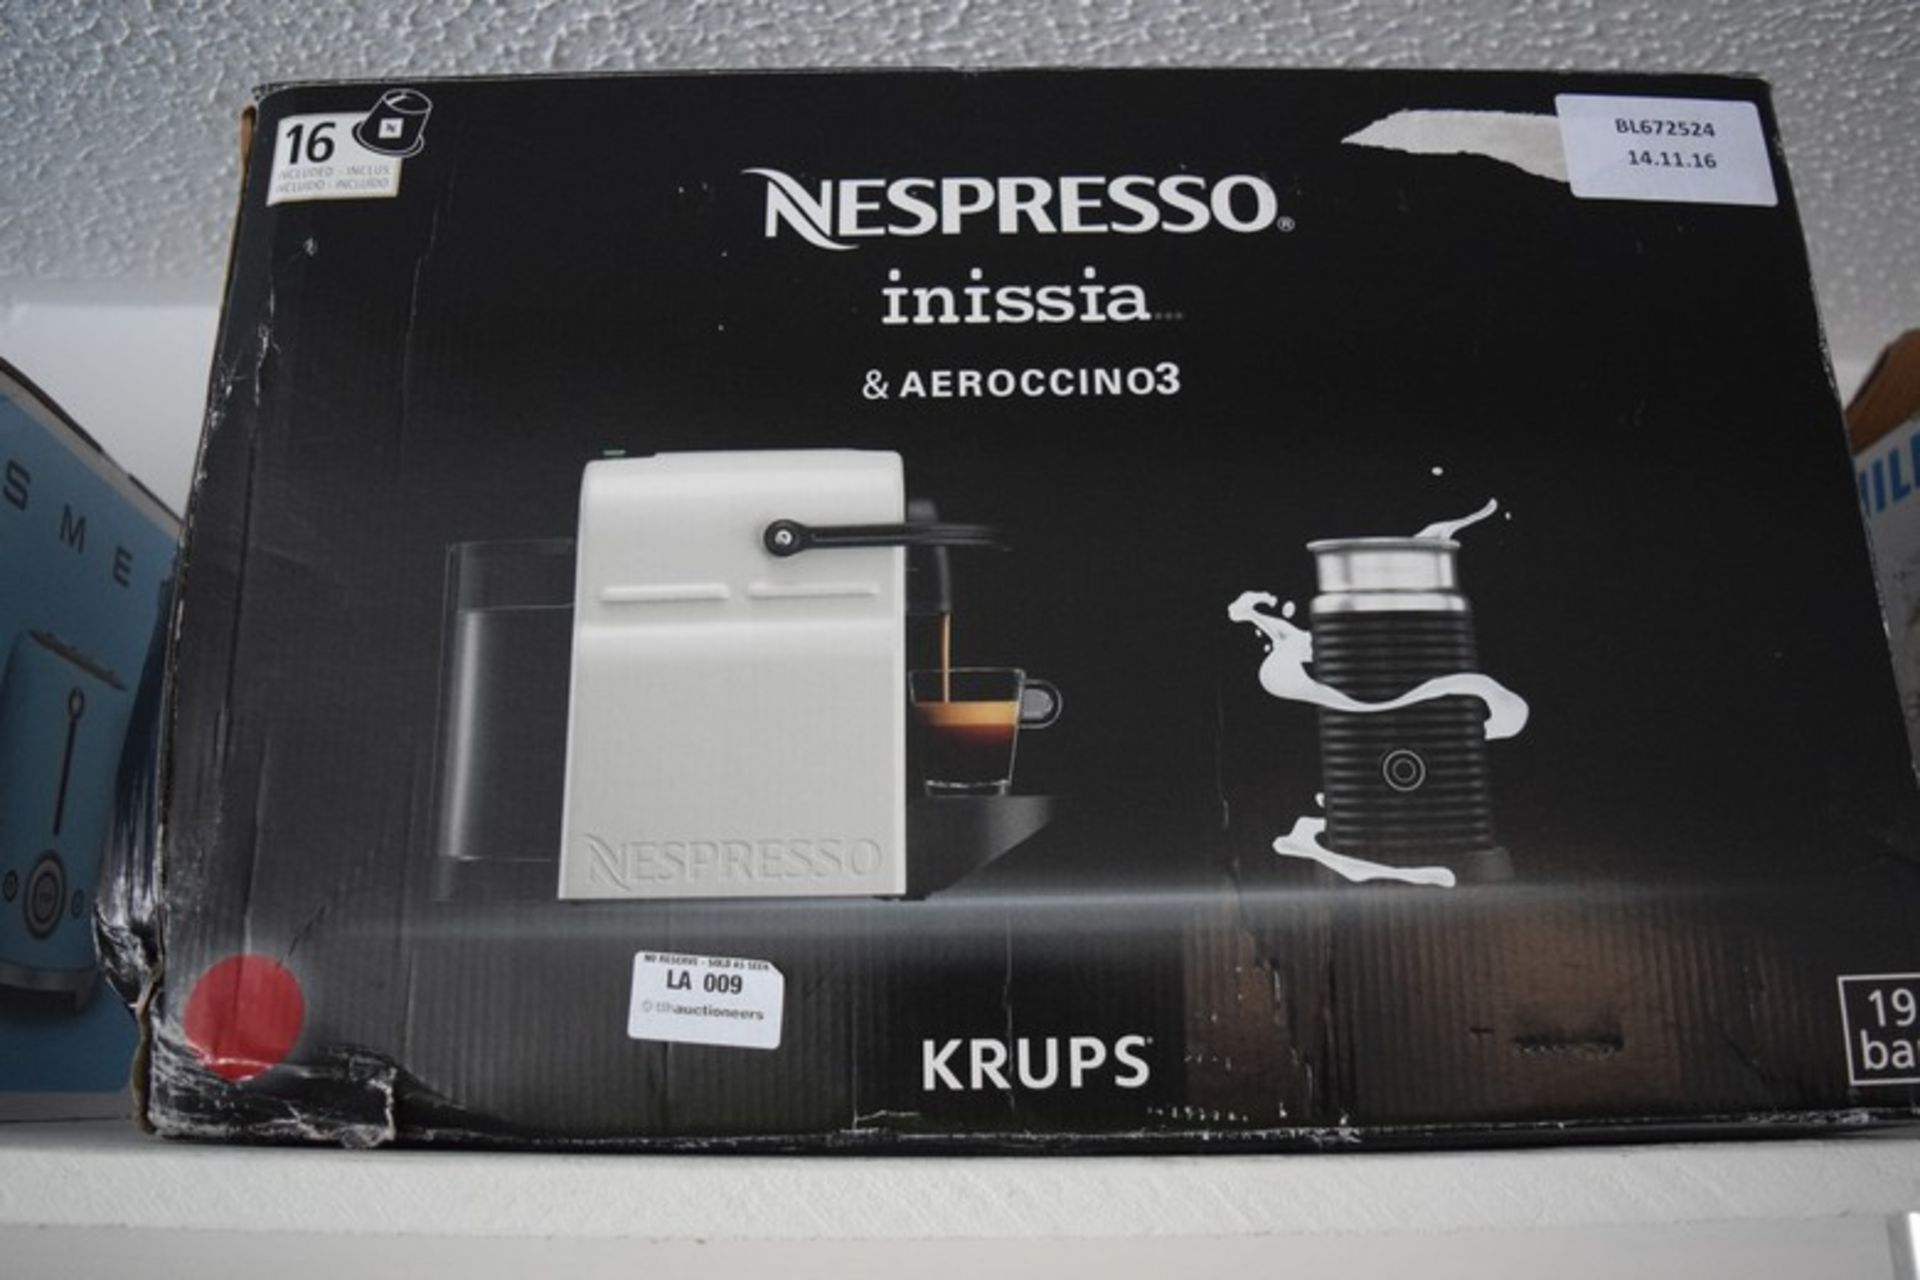 1 x BOXED KRUPS NESPRESSO INISSIA AEROCCINO3 AUTOMATIC COFFEE MACHINE RRP £180 (14.11.2016) *